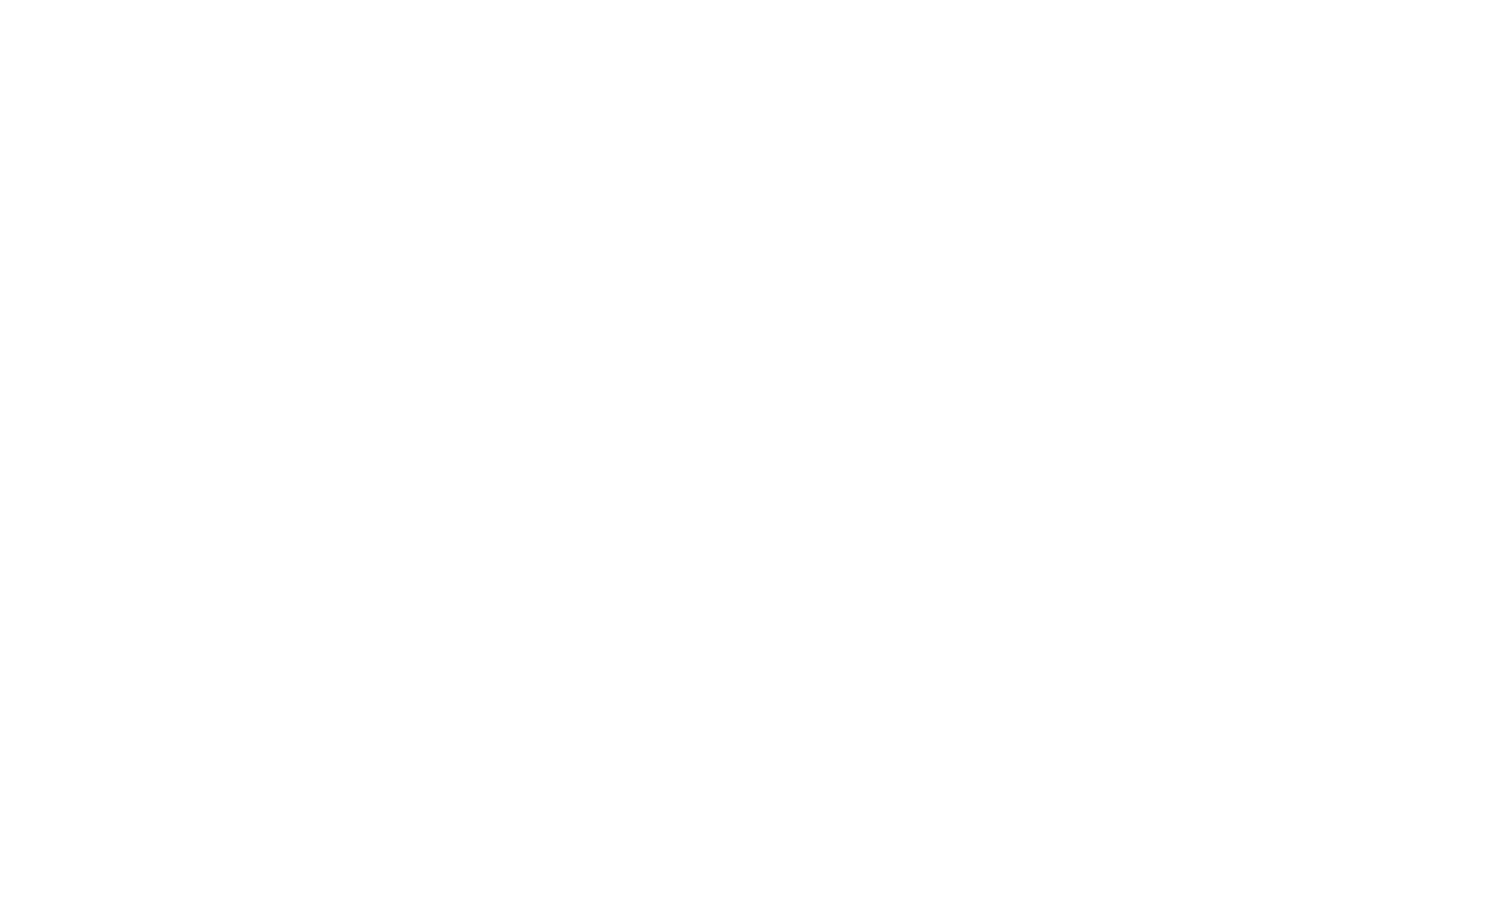 communicating vessels